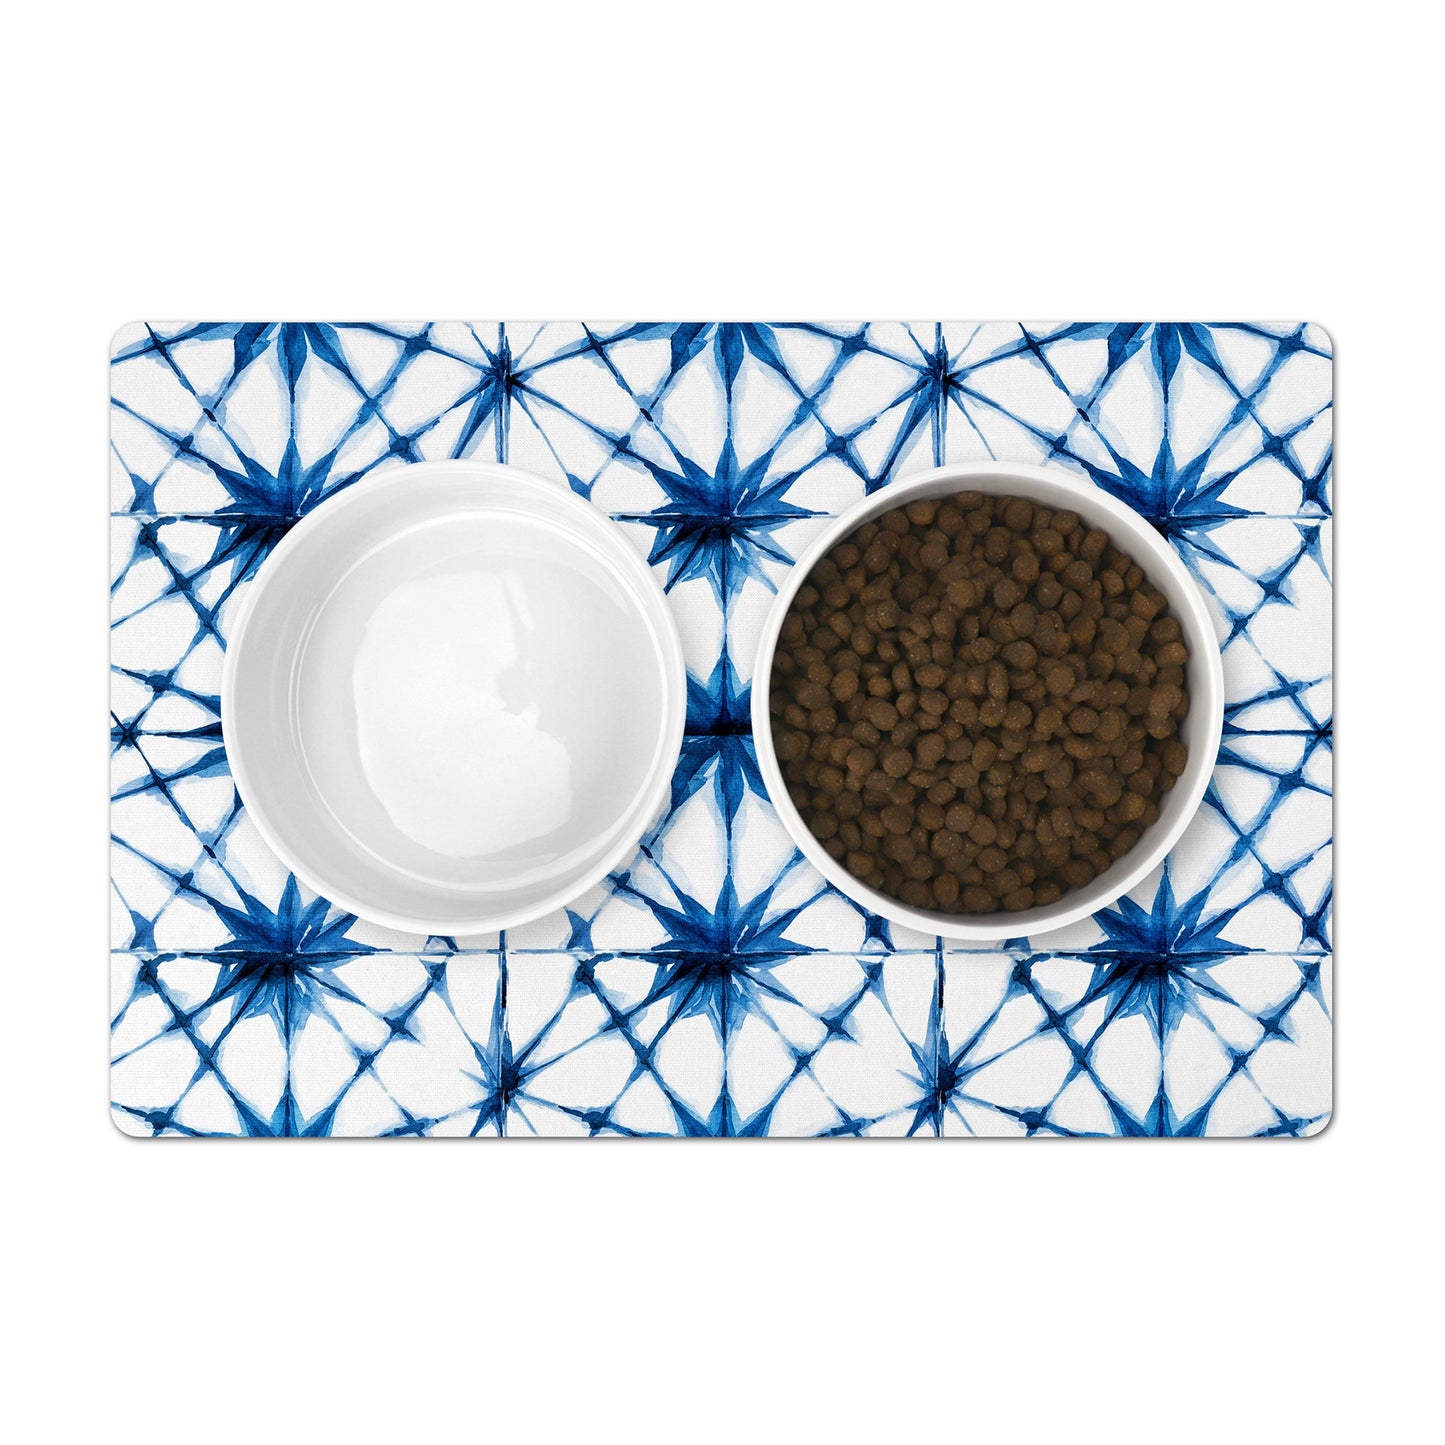 Pet food mat with indigo blue shibori tie dye print for pet food bowls.